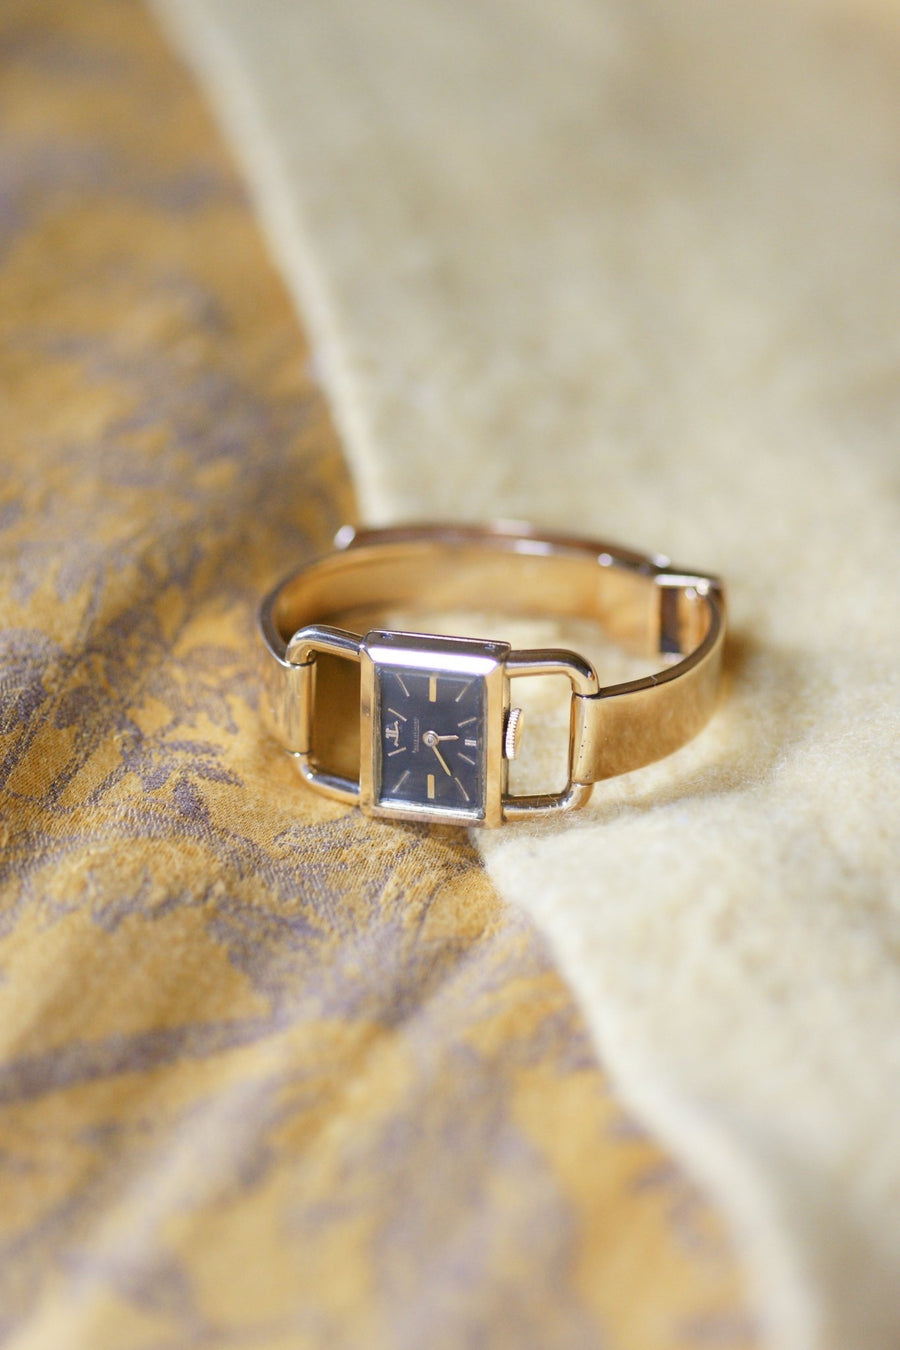 LeCoultre LeCoultre for Hermès ladies' mechanical watch in gold, 1970's - Galerie Pénélope